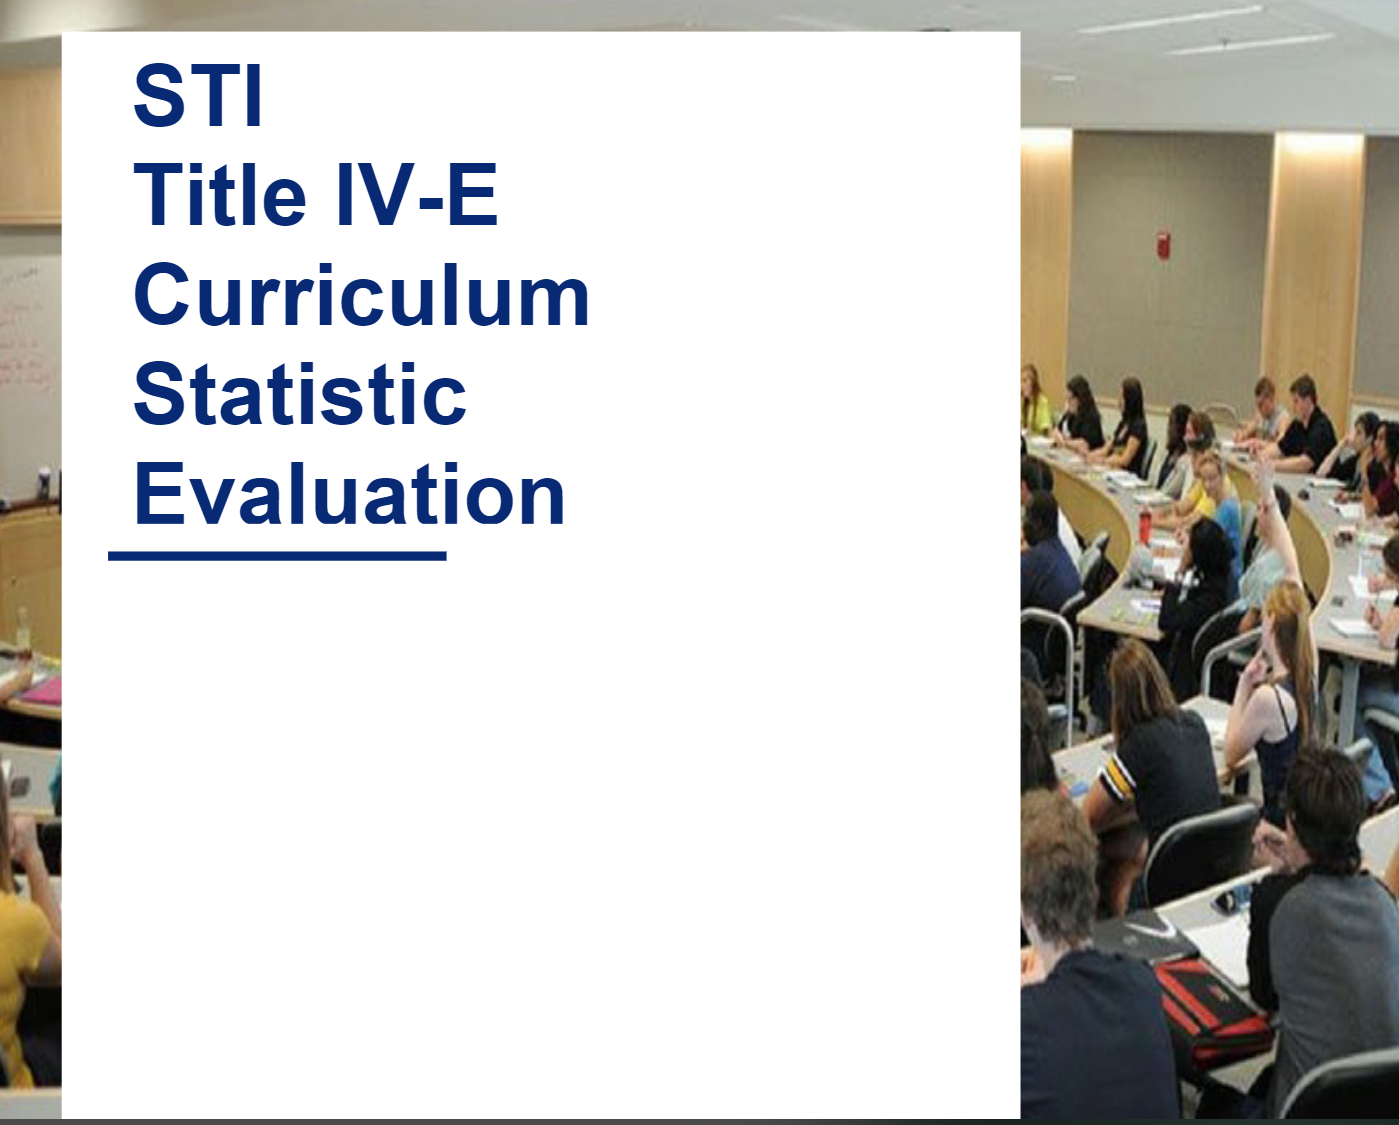 Title IV-E Curriculum Statistic Evaluation